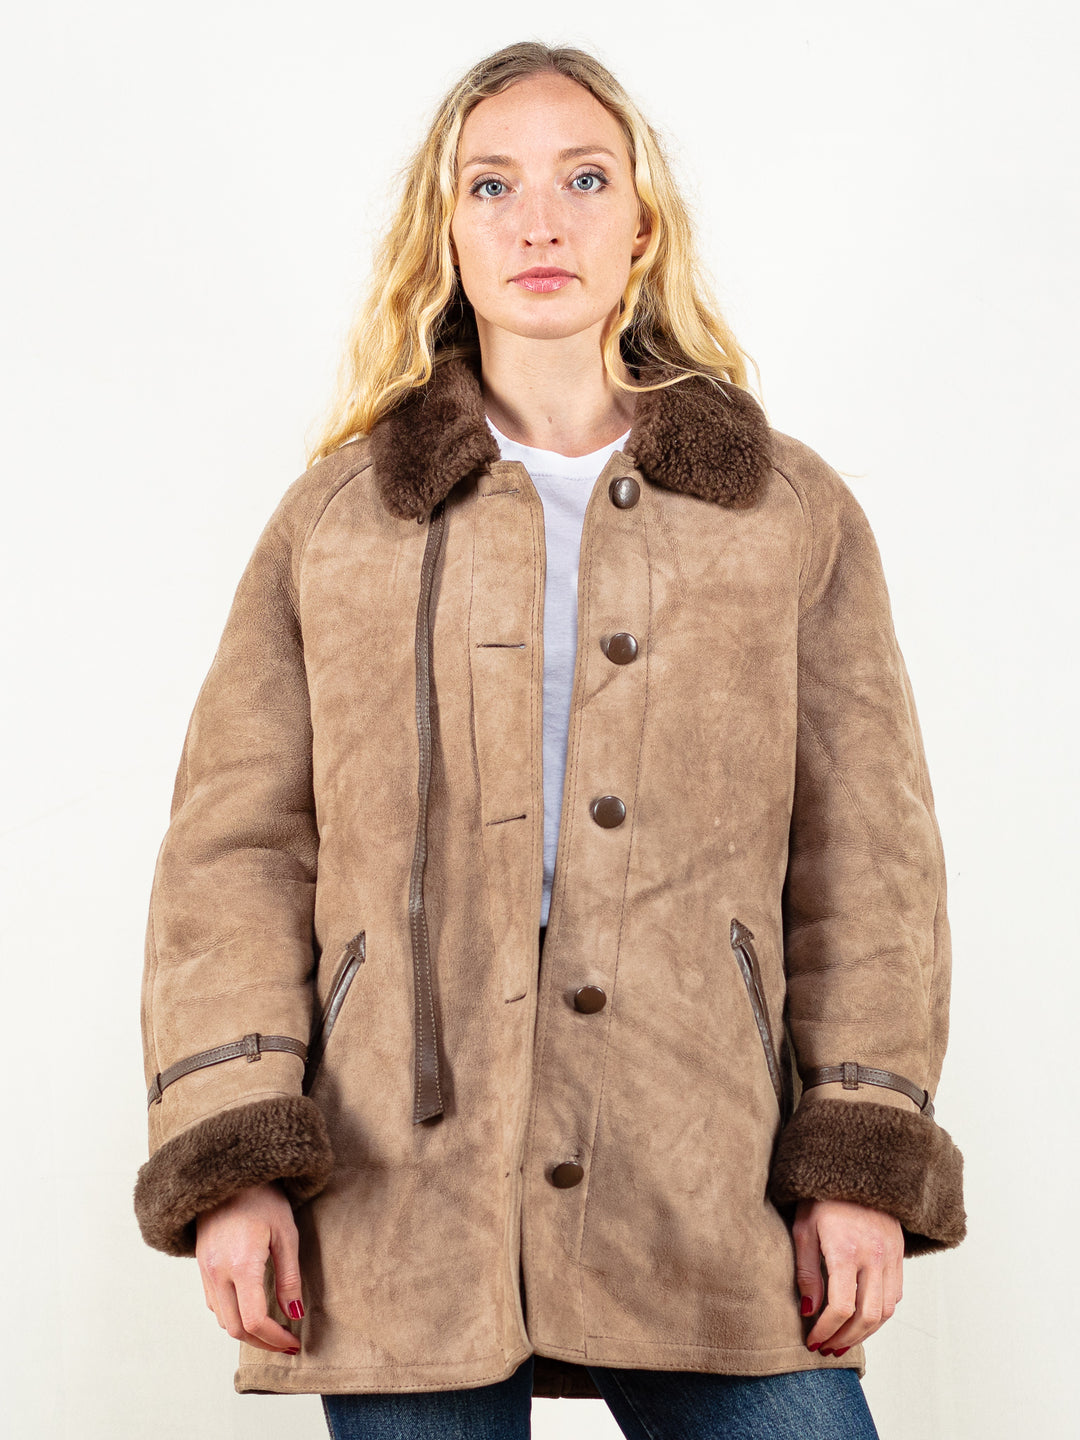 Penny Lane Shearling coat vintage 70's women brown suede sheepskin shearling coat penny lane winter outerwear vintage clothing size large L